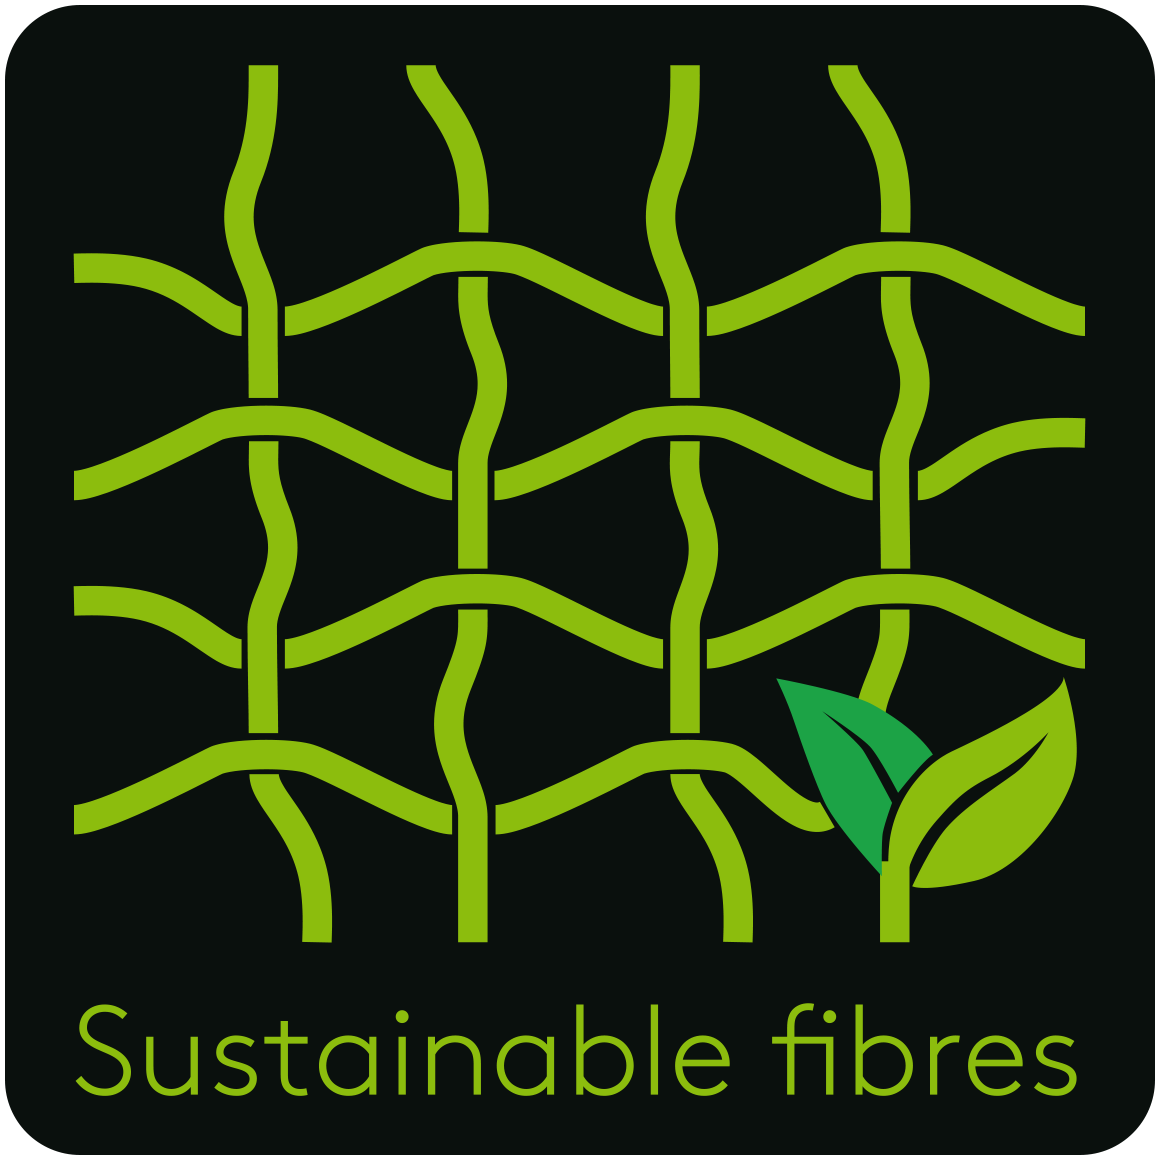 Sustainable fibers